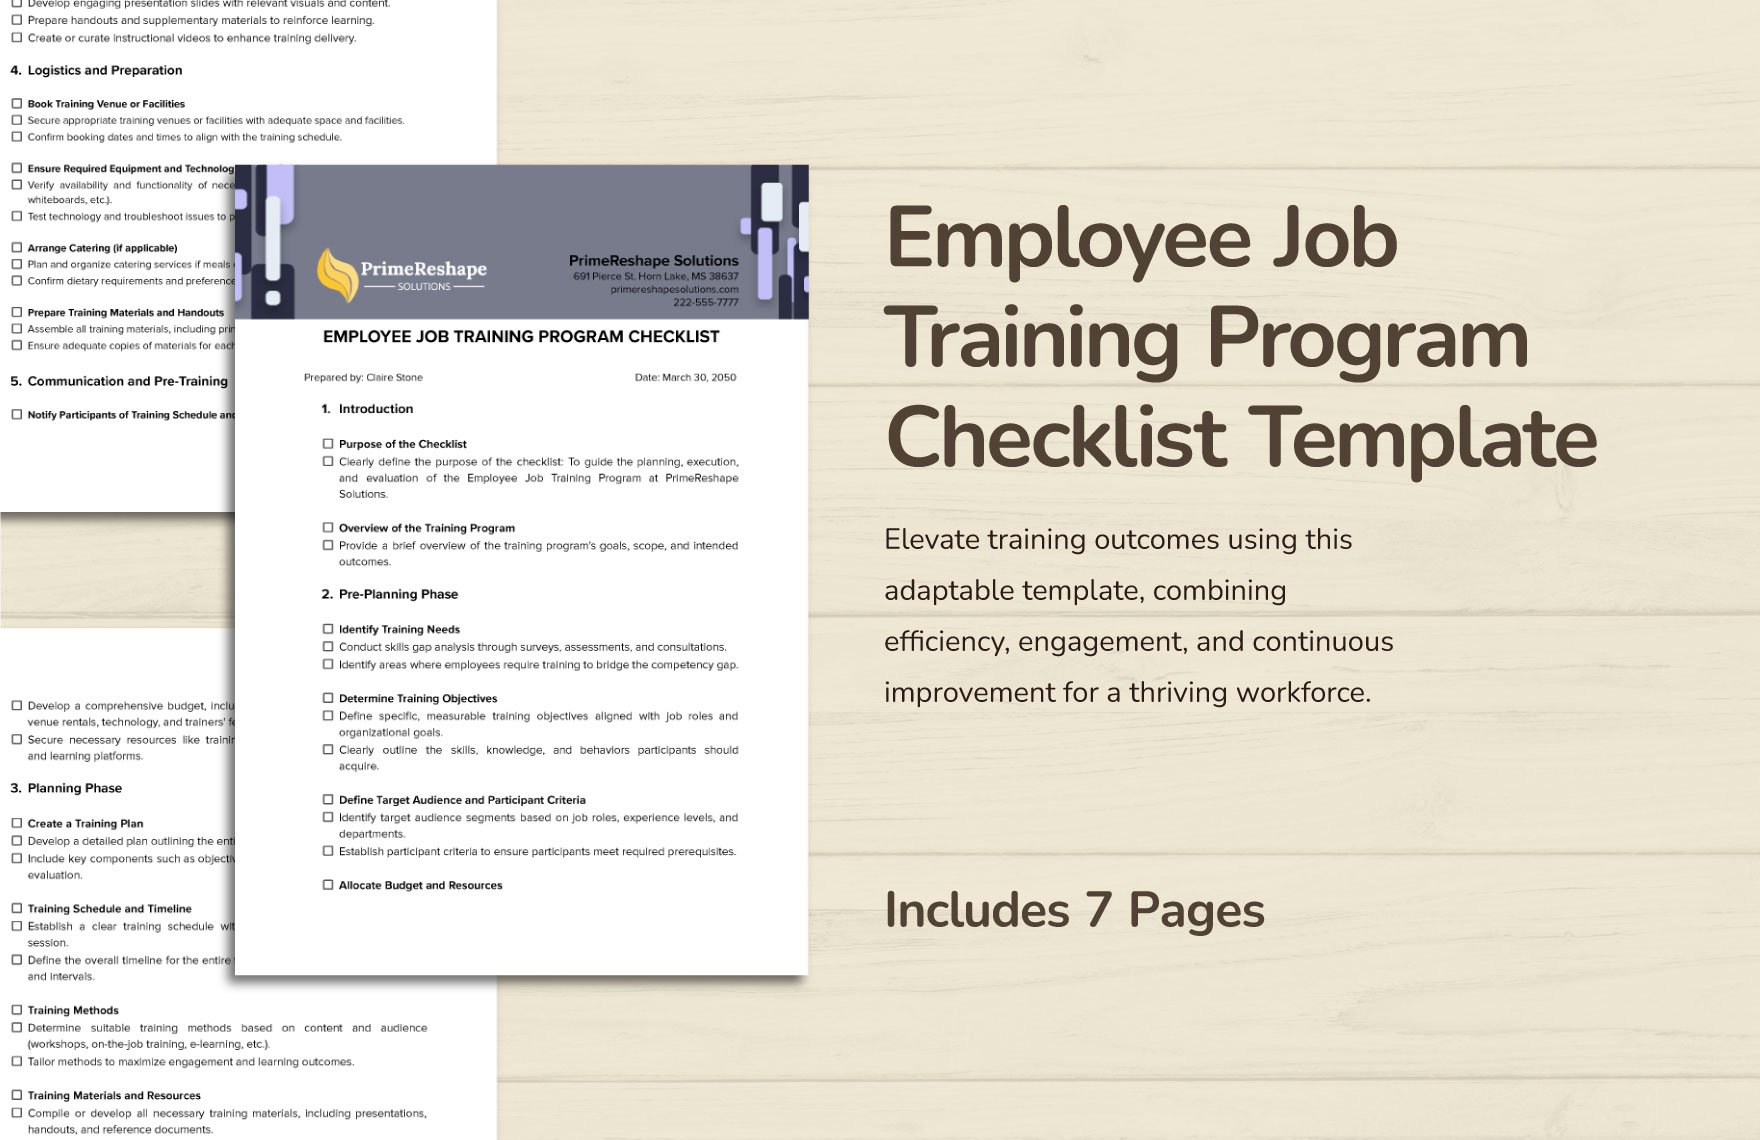 Employee Job Training Program Checklist Template